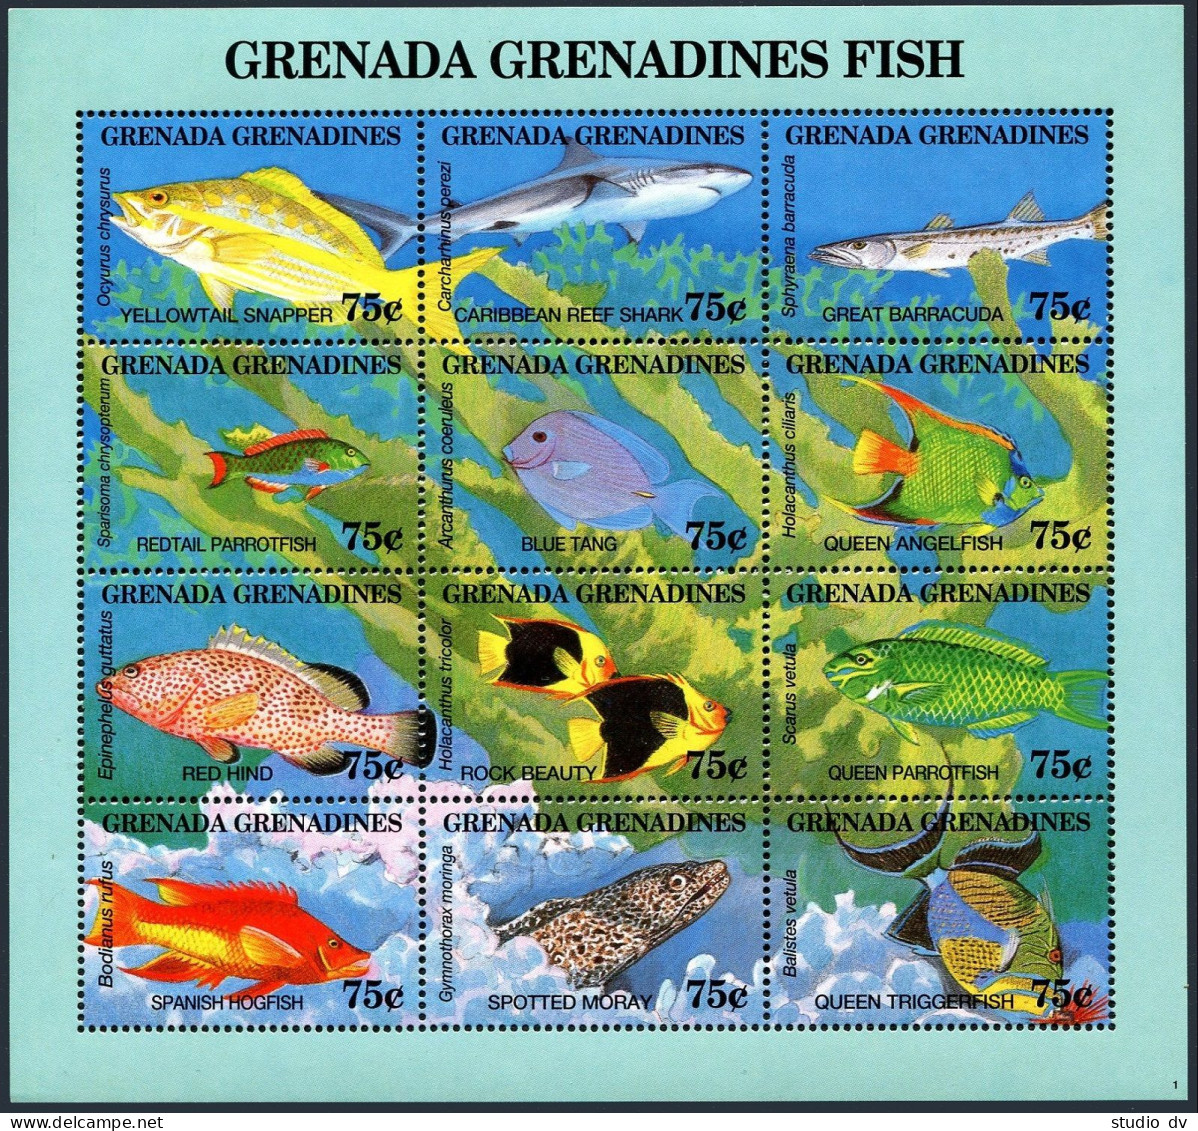 Grenada Gren 1690-1691 Al Sheets,MNH.Michel 1934-1957. Marine Life 1994.Fish. - Grenade (1974-...)